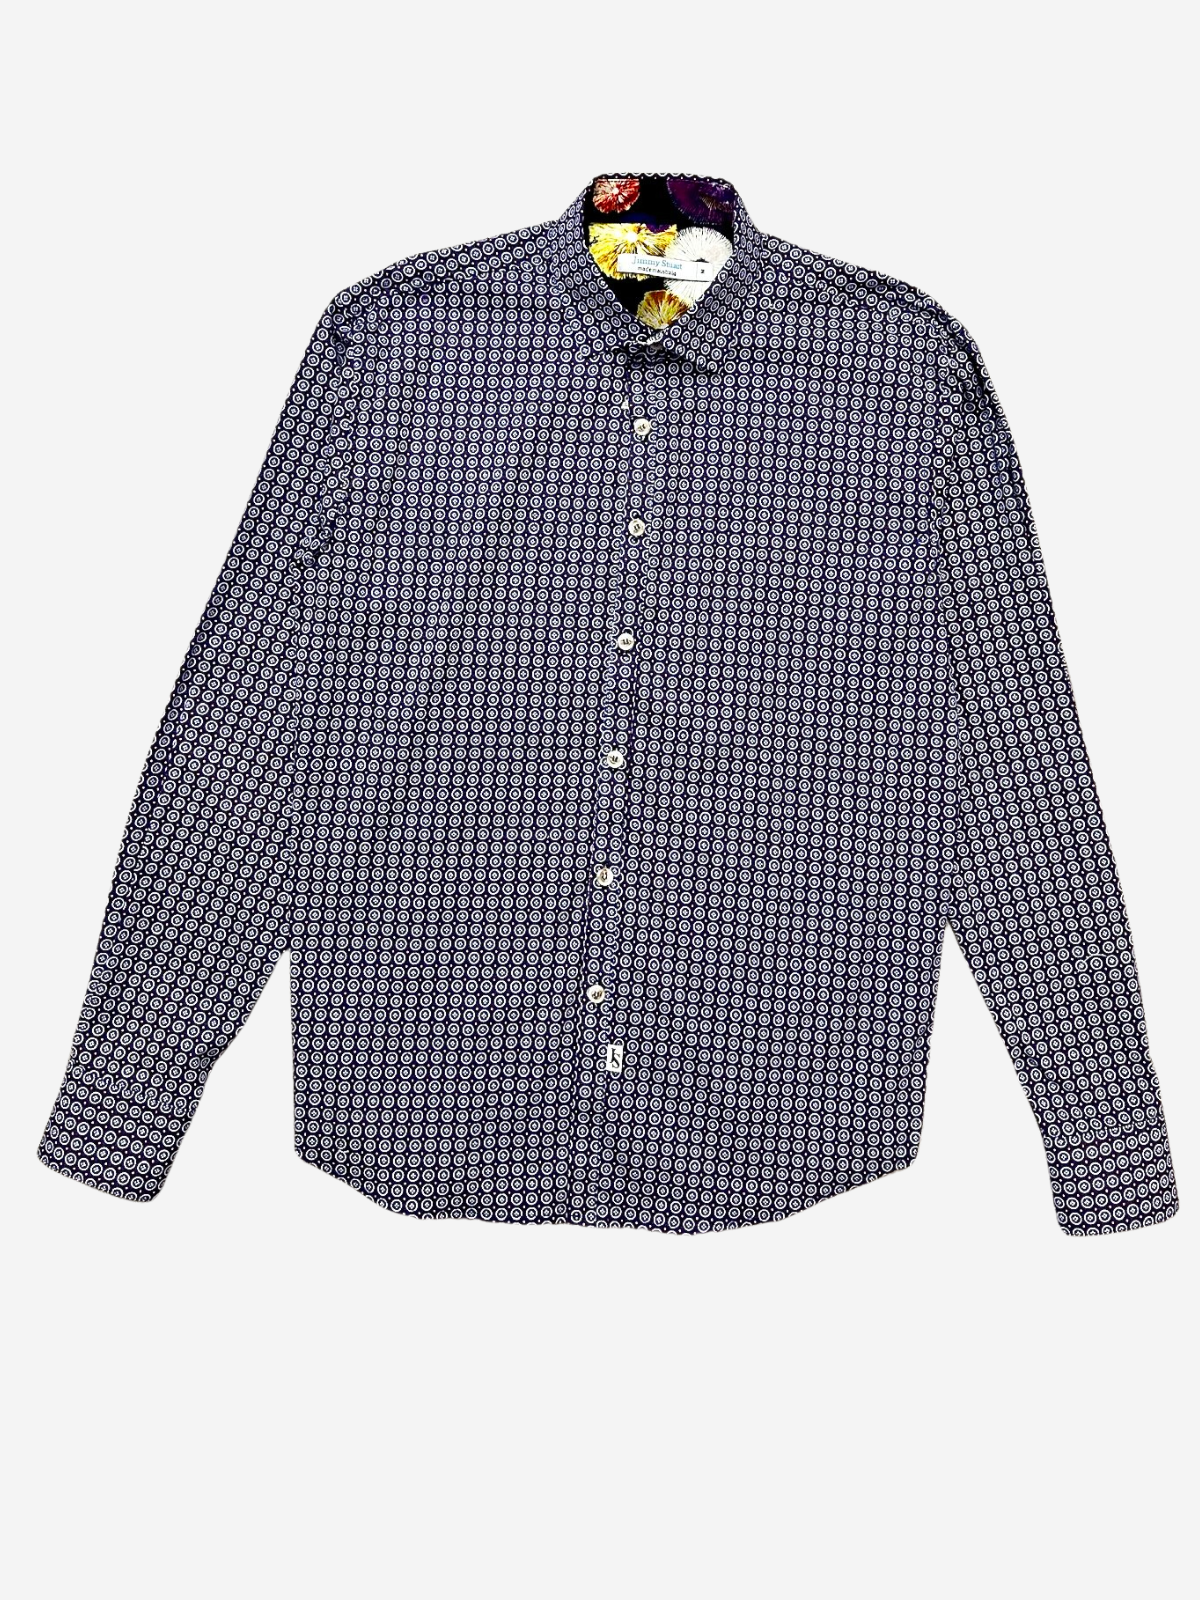 Vortex Geometric Cotton L/S Shirt - Purple